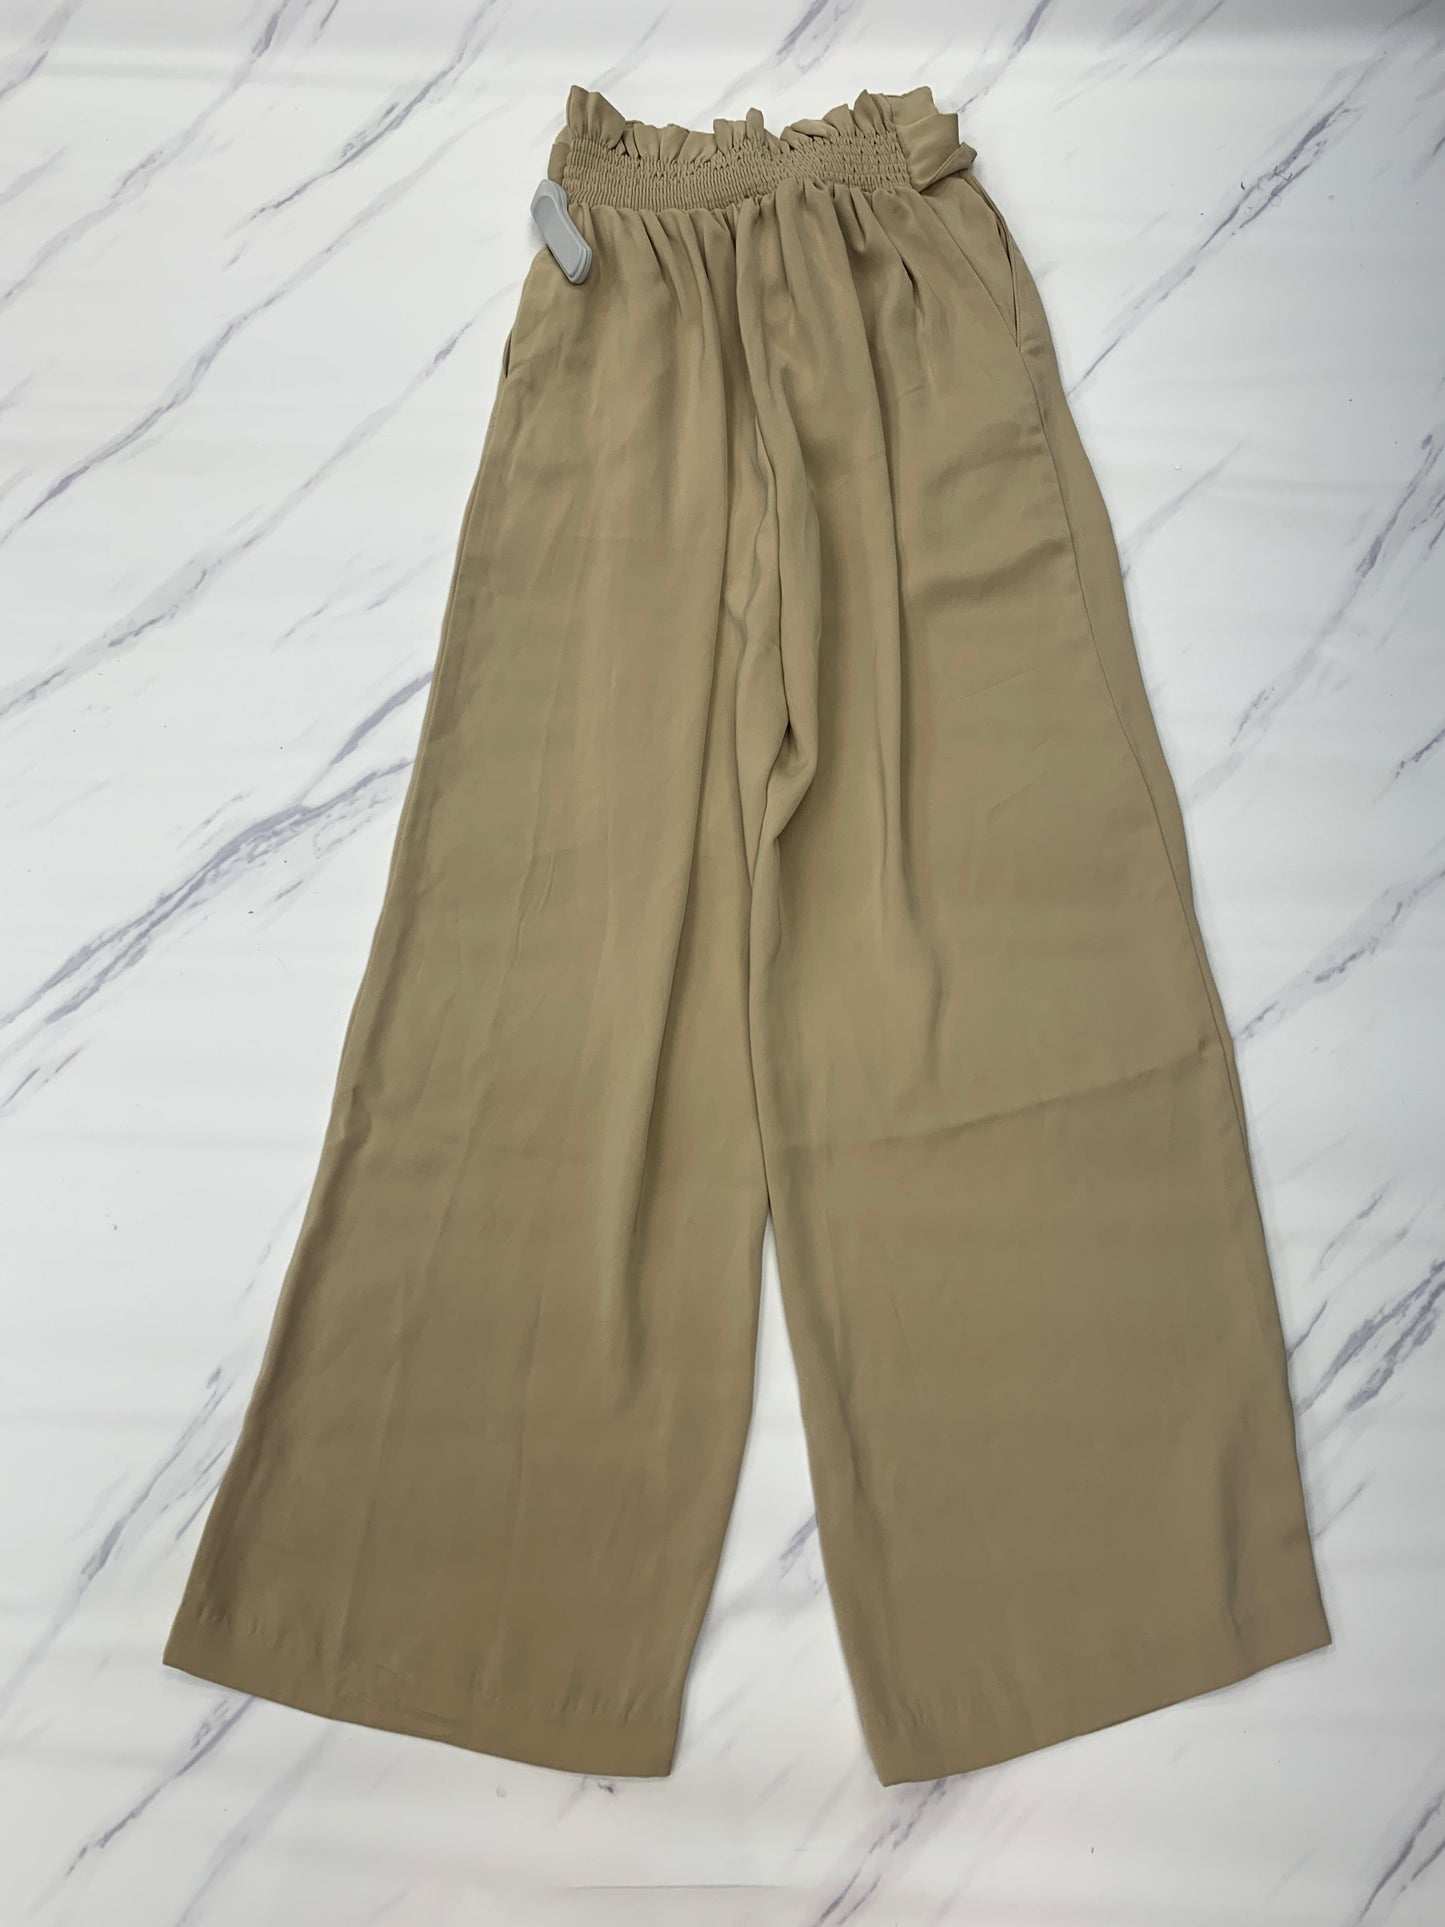 Pants Designer By Michael By Michael Kors  Size: S